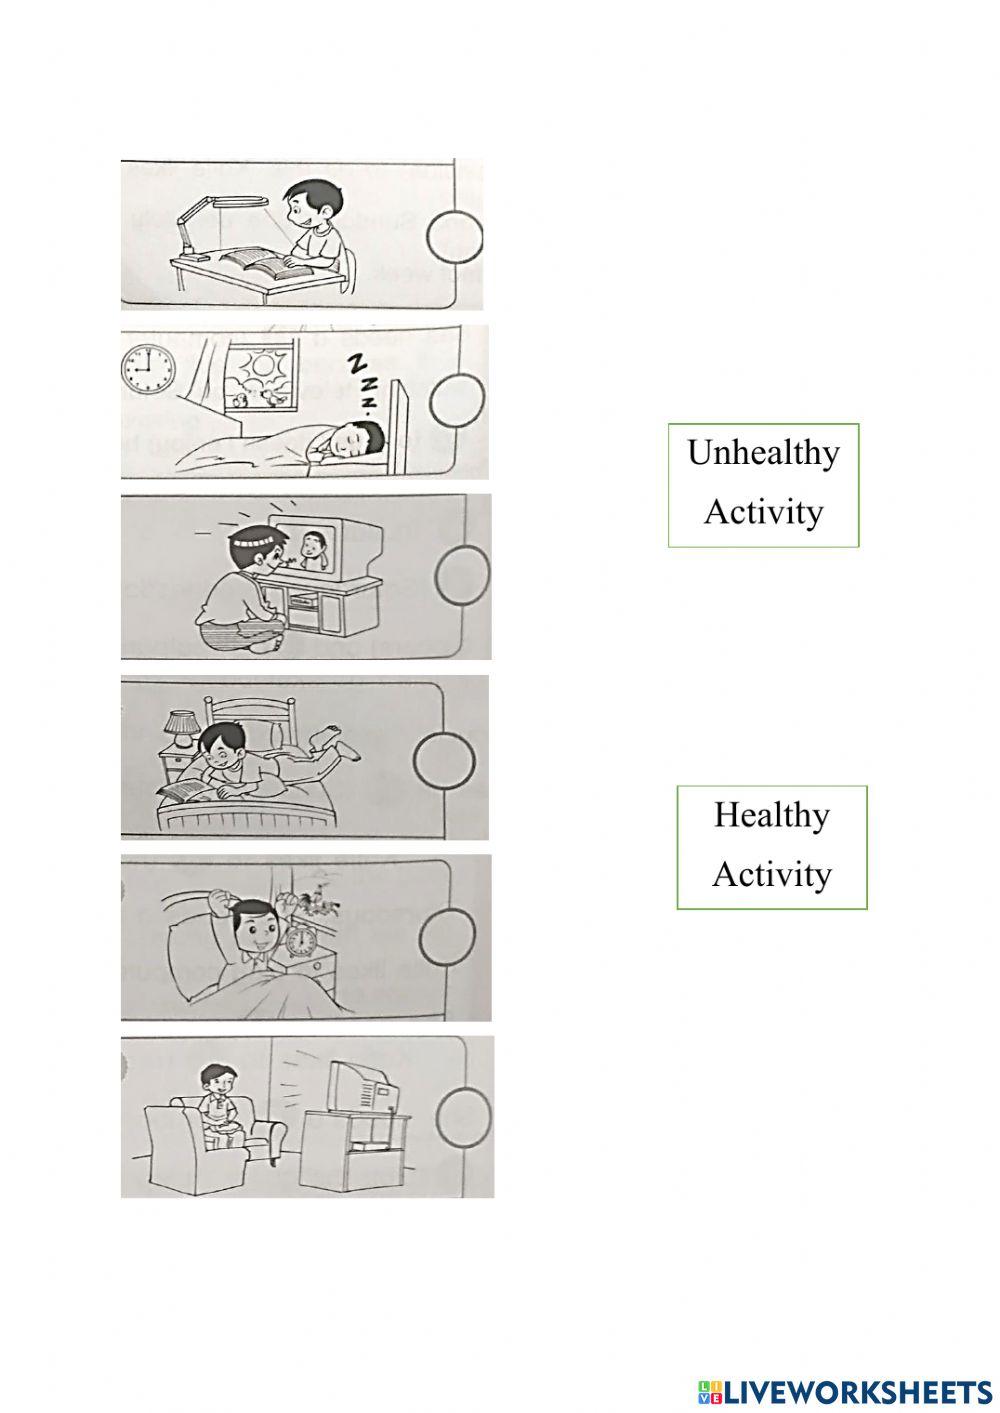 Healthy and Unhealthy Activity